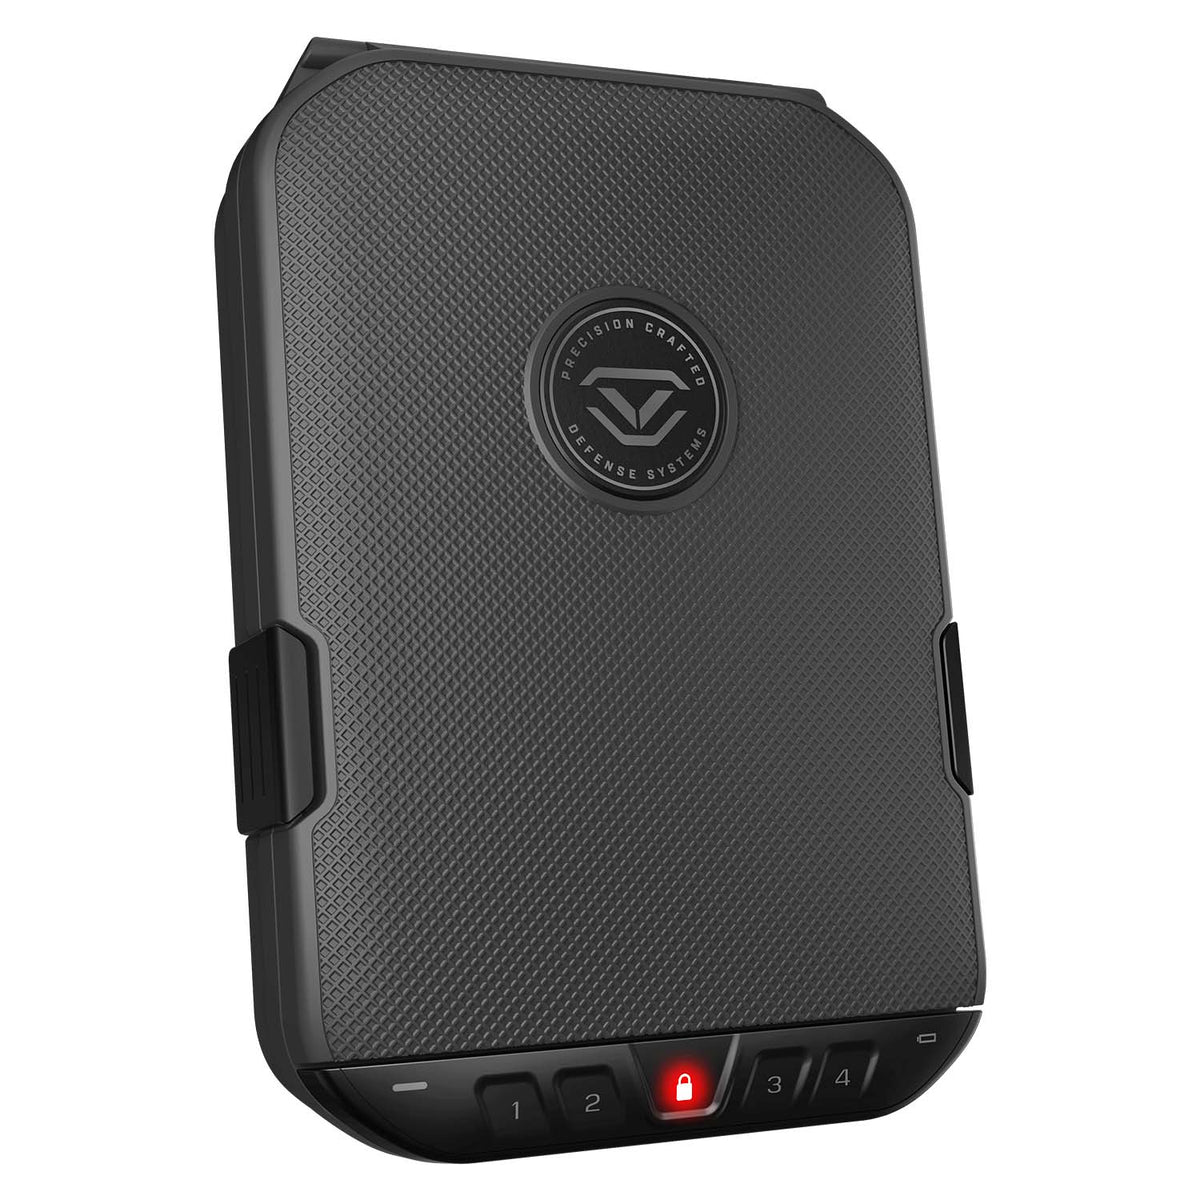 Vaultek - LifePod 2.0 Full-Size Secure Weather Resistant Keypad Gun Safe with Built-in Lock System